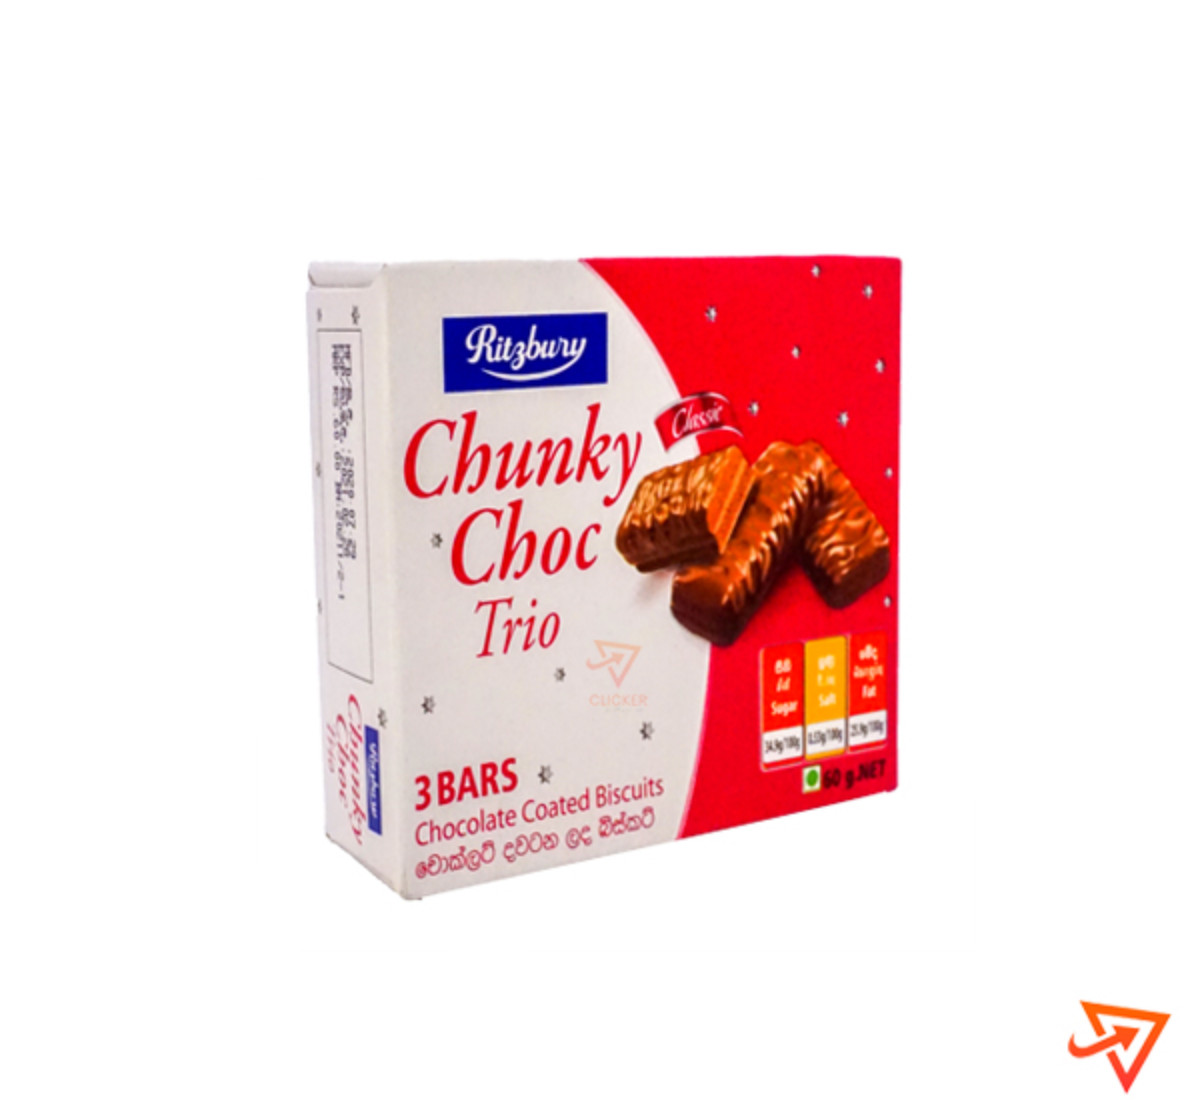 Clicker product 60g CBL Ritzbury Chunky choc Trio Classic - 3 Bars 1161